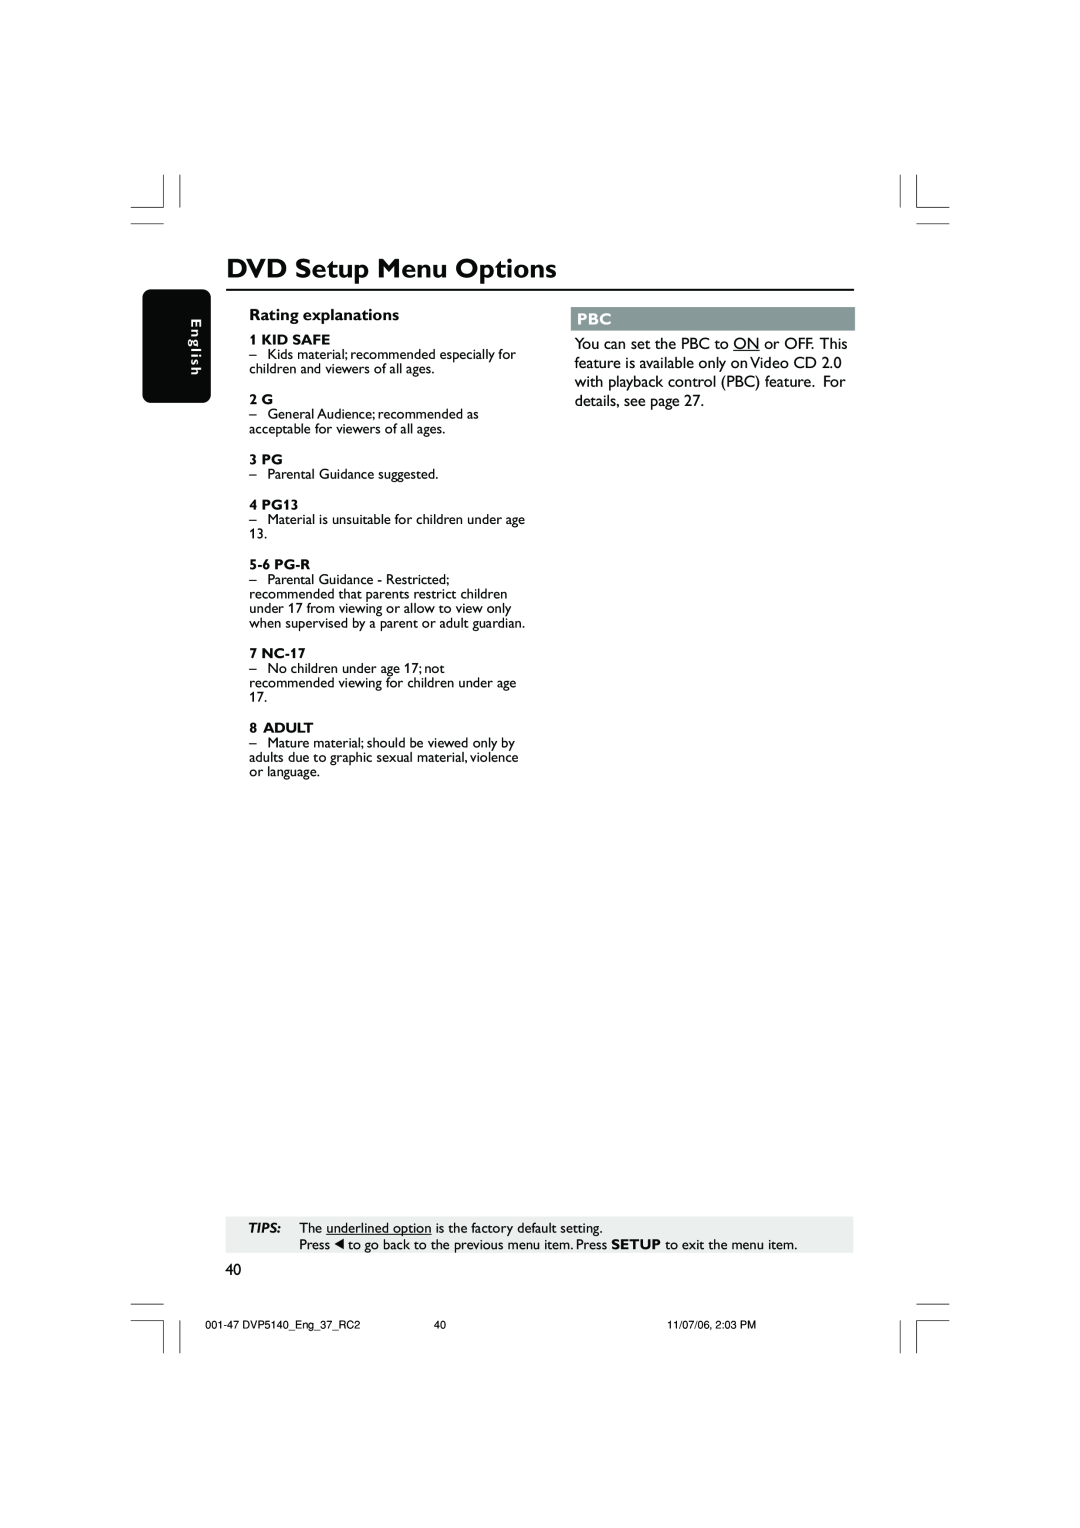 Philips DVP5140 user manual DVD Setup Menu Options, Rating explanations, E n g l i s h 